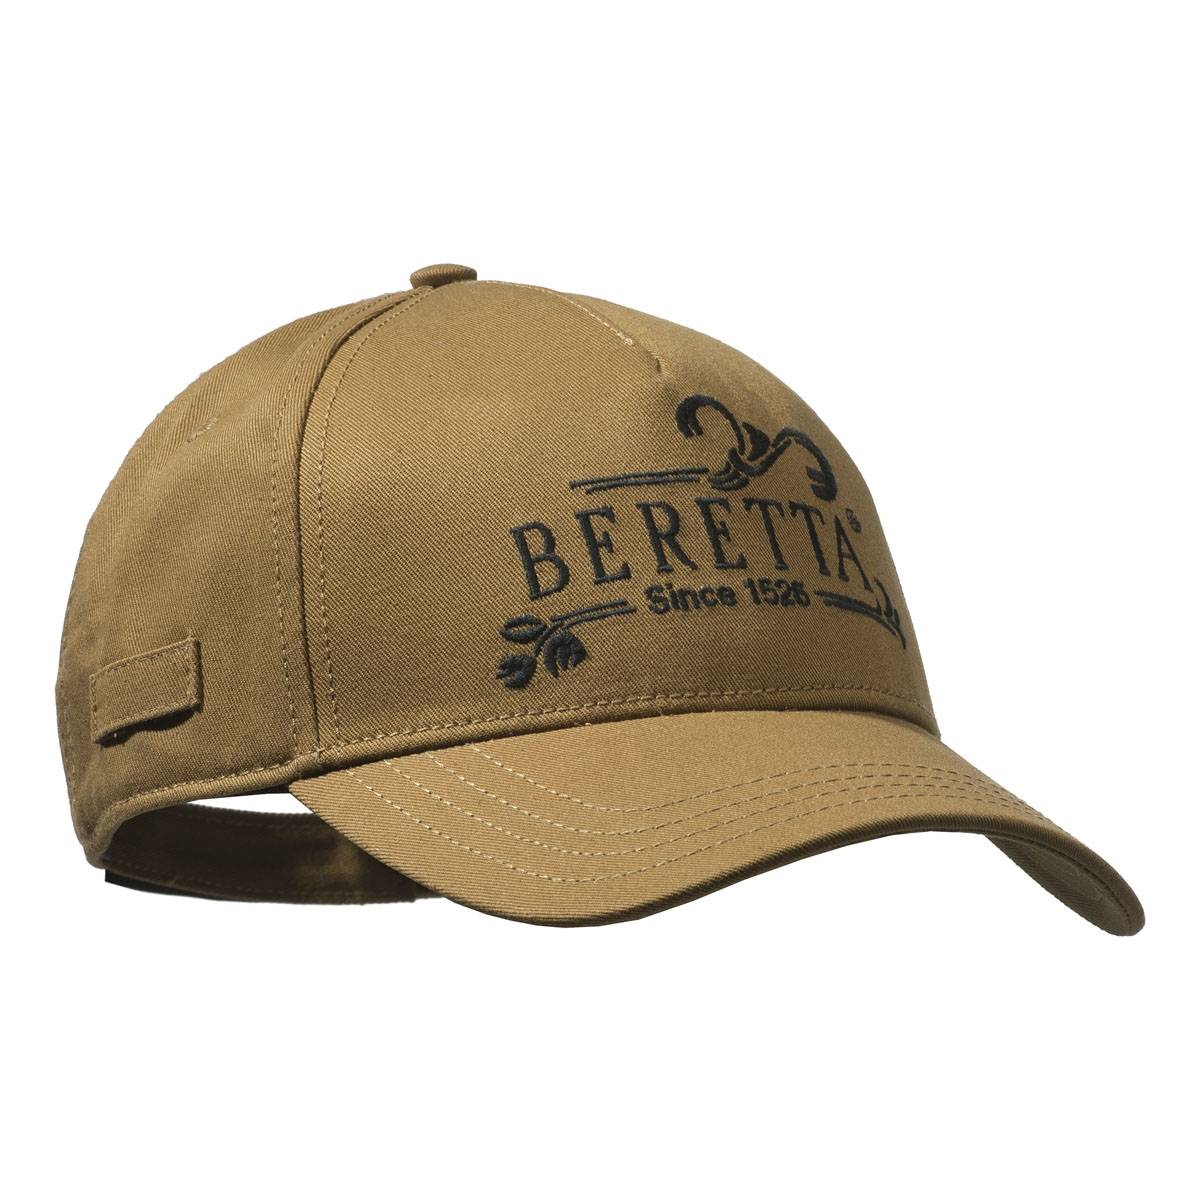 Beretta 'Since 1526' Cap (Brown)